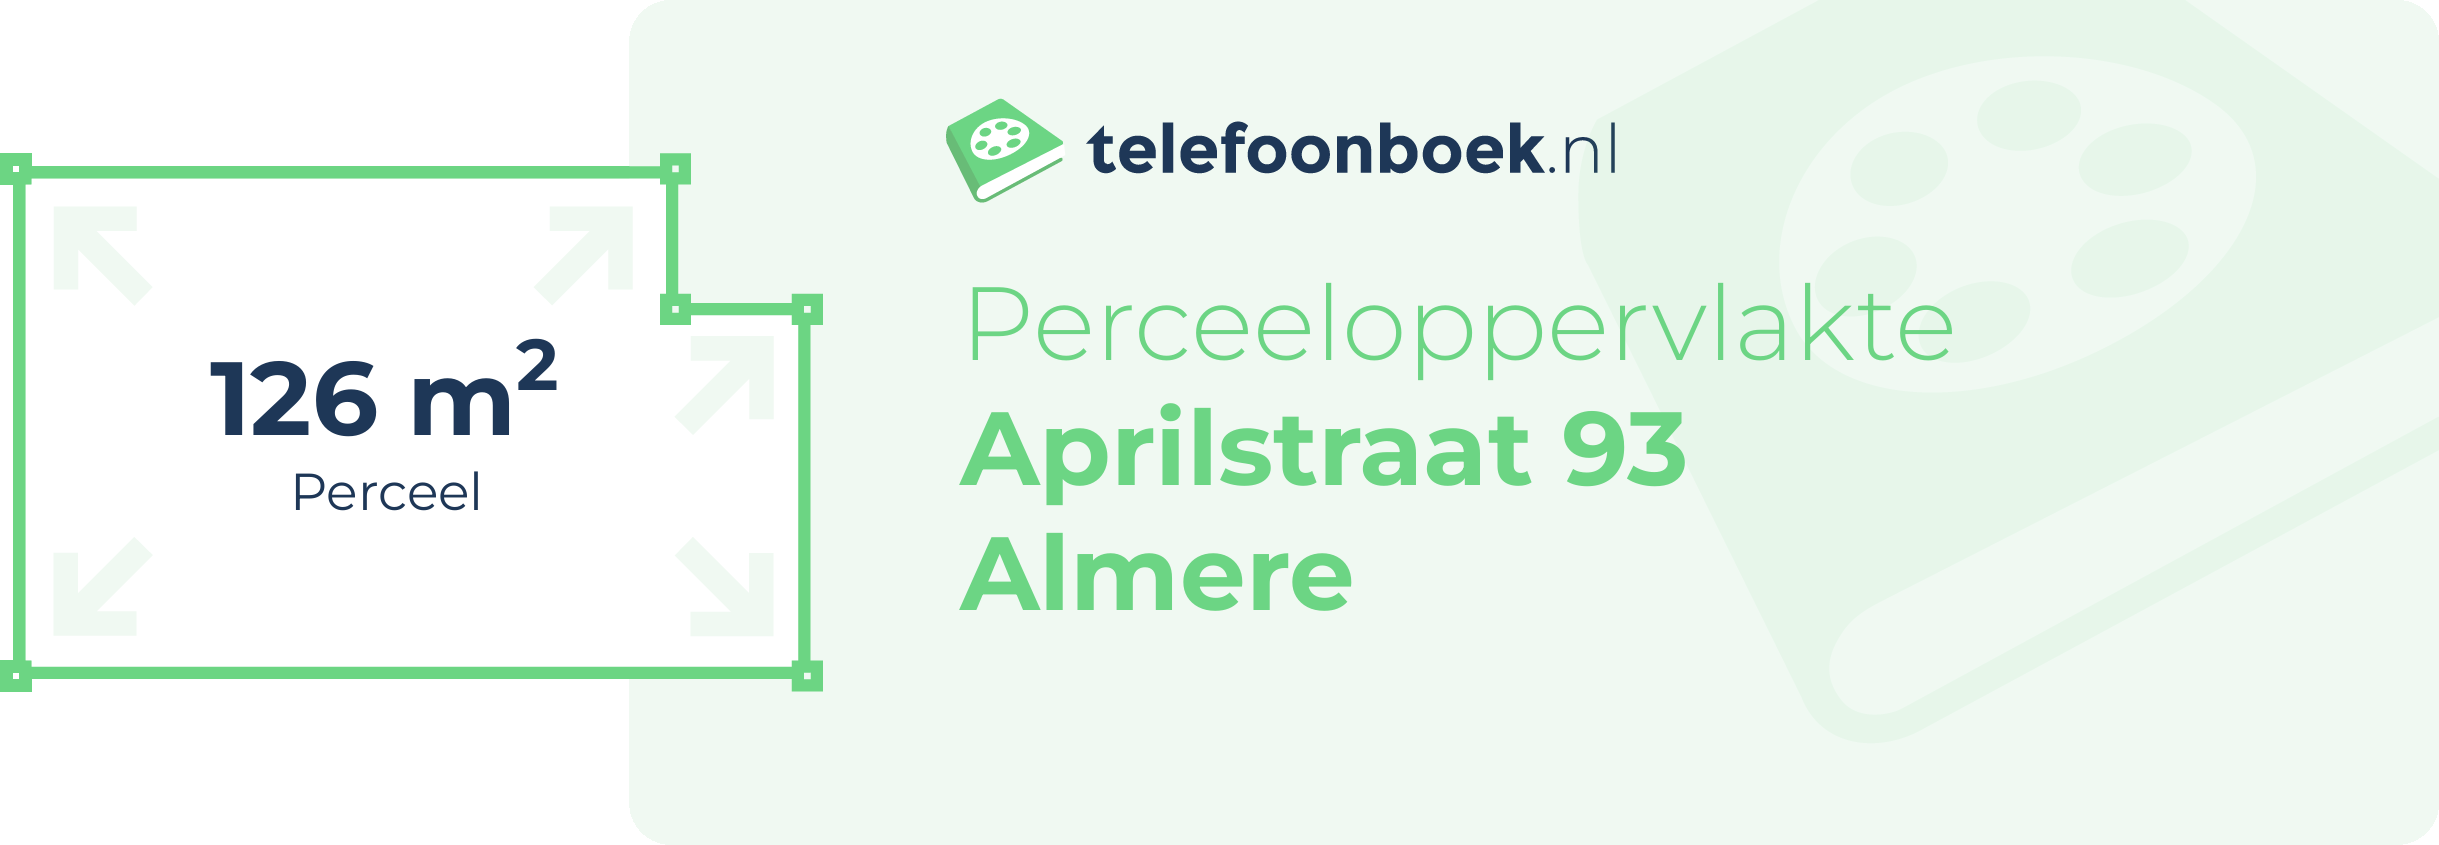 Perceeloppervlakte Aprilstraat 93 Almere